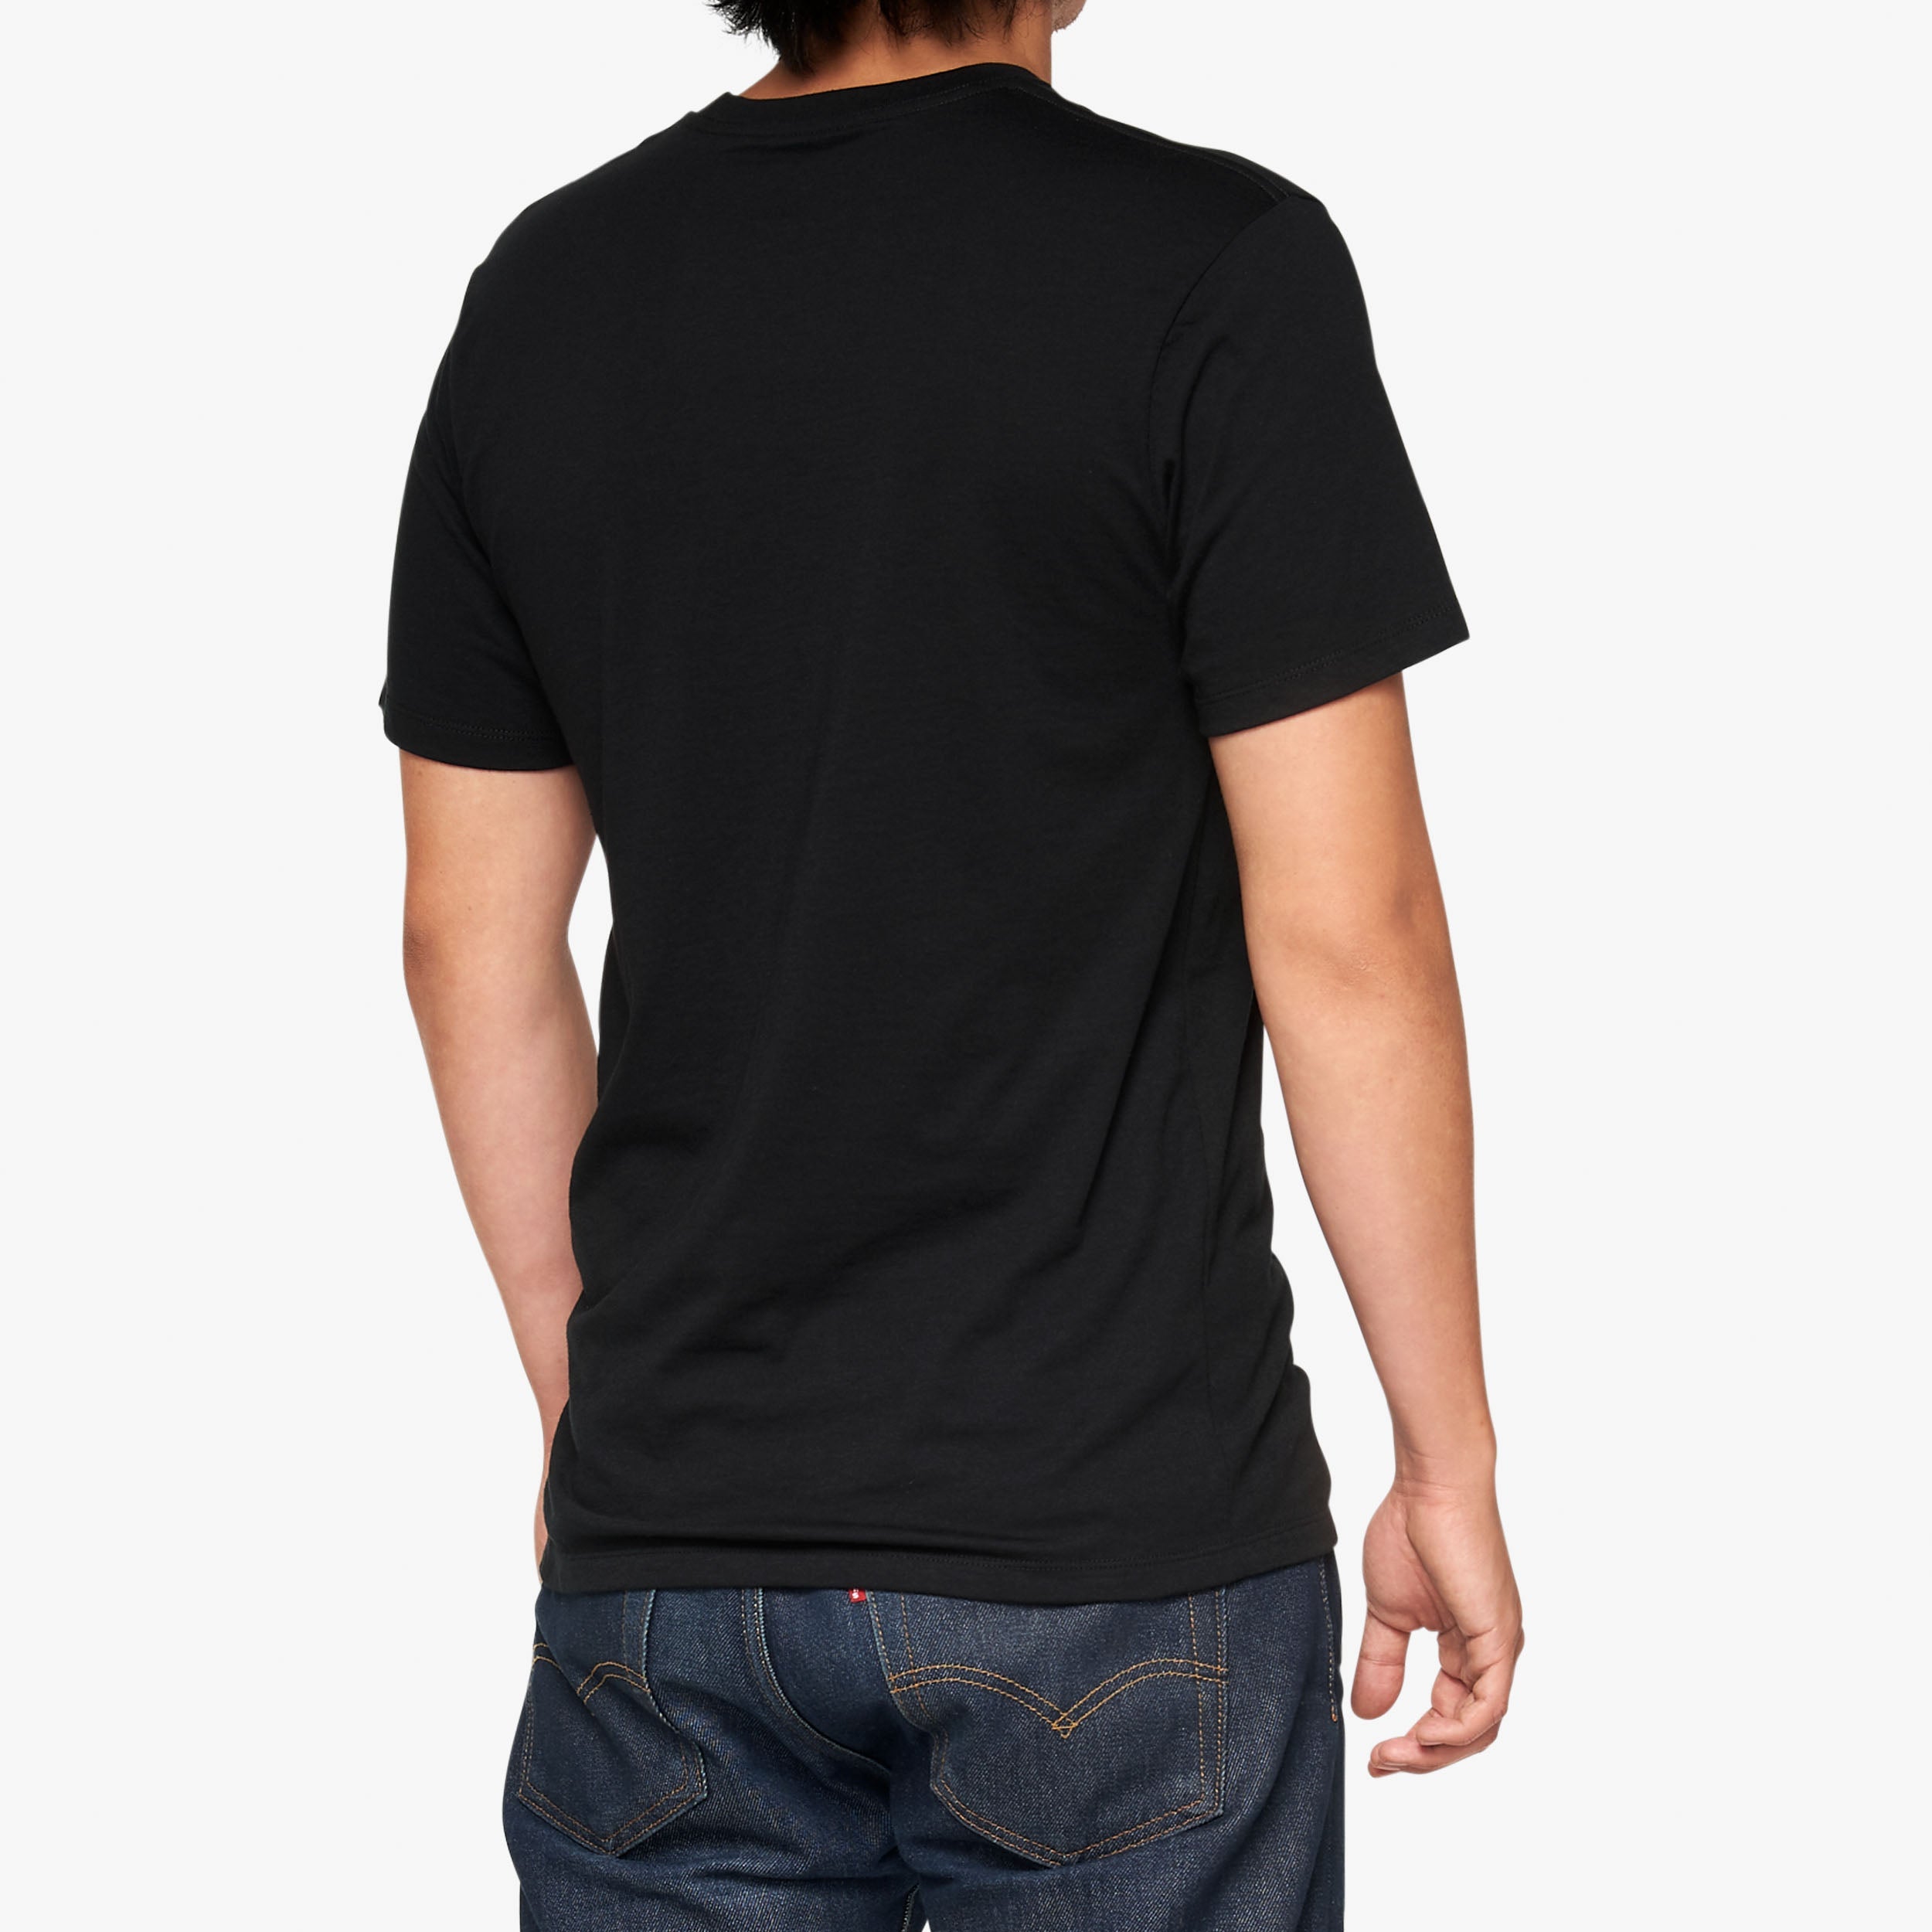 ELDER T-Shirt Black - Secondary